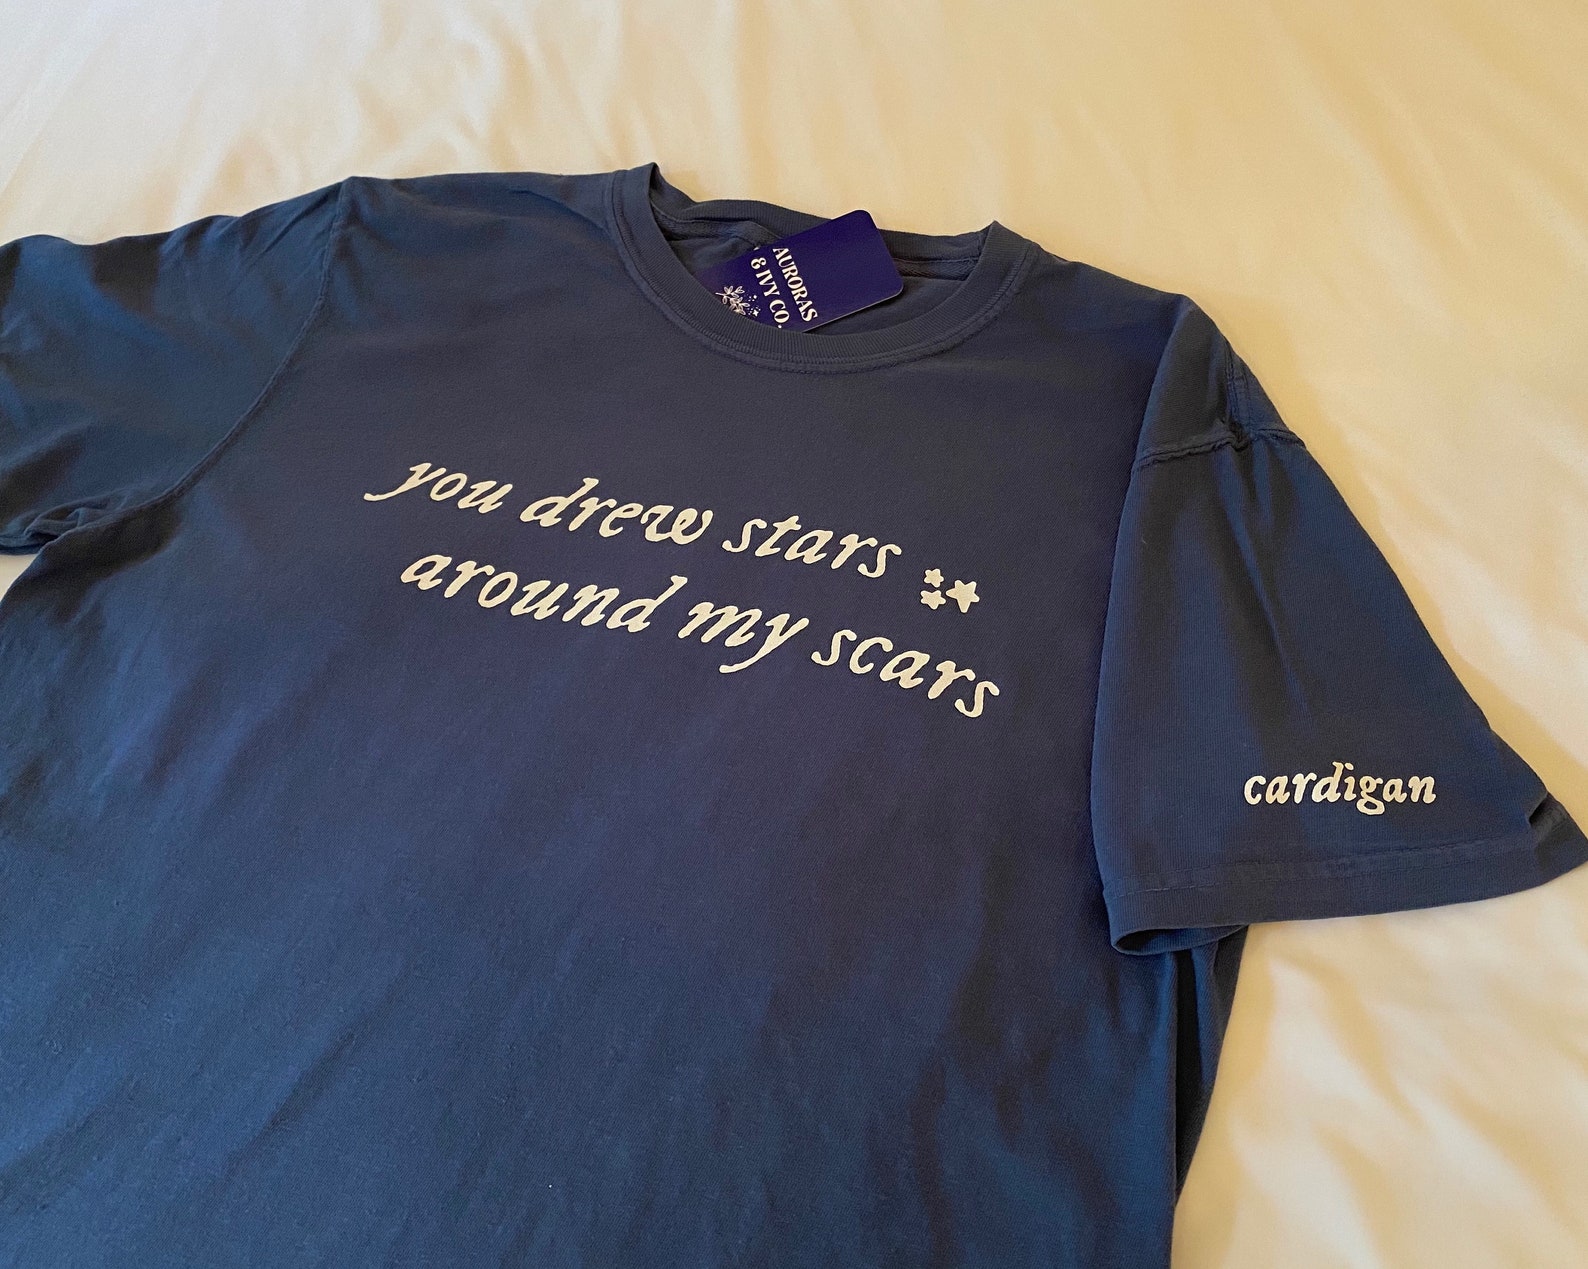 Cardigan t-shirt Taylor Swift folklore shirt you drew | Etsy